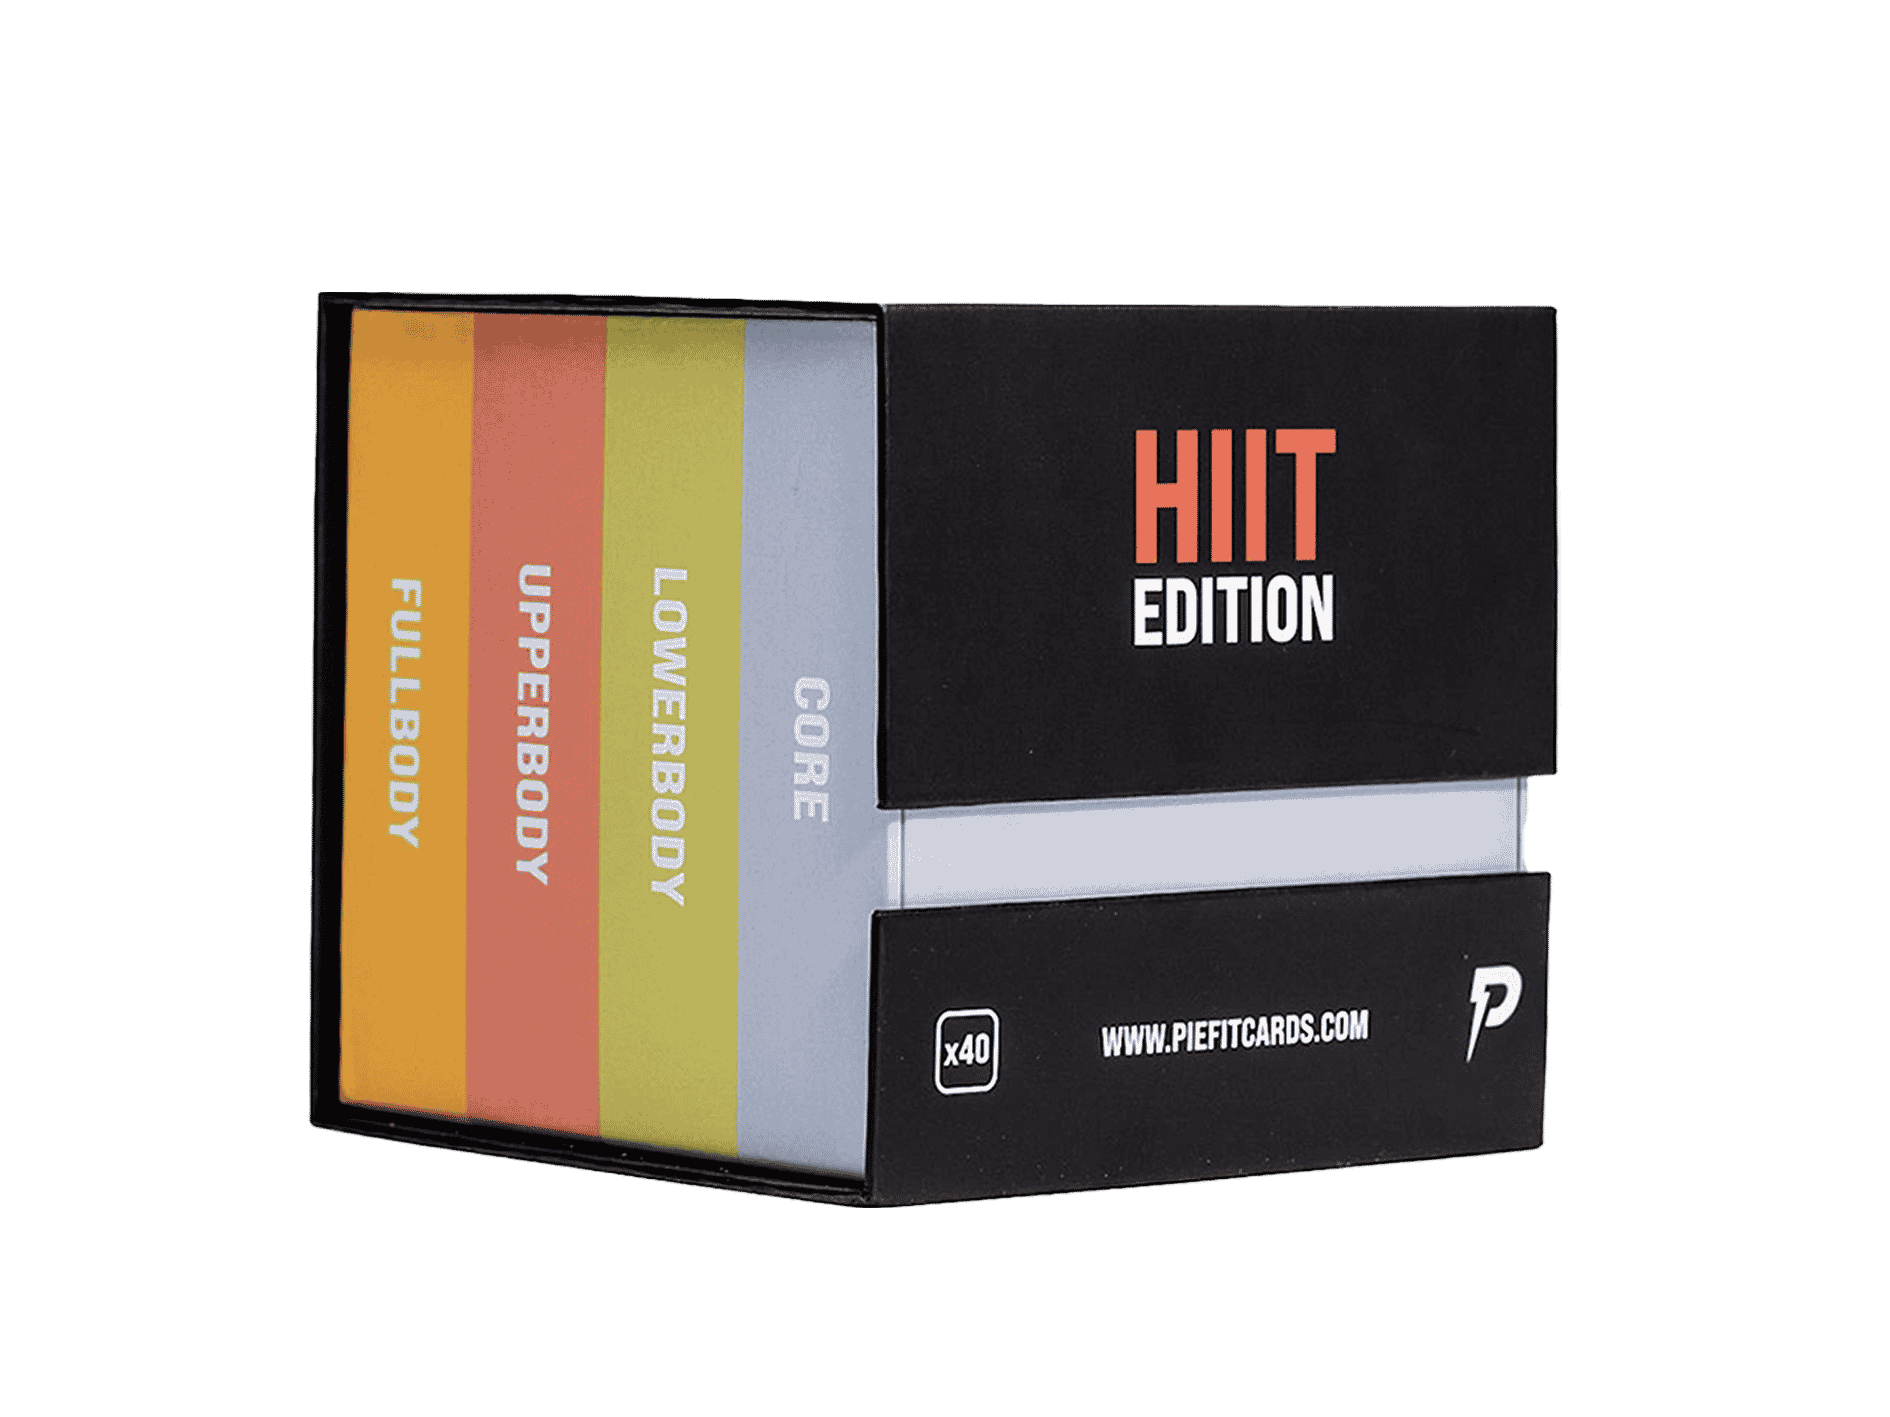 PiefitCards box HIIT edition